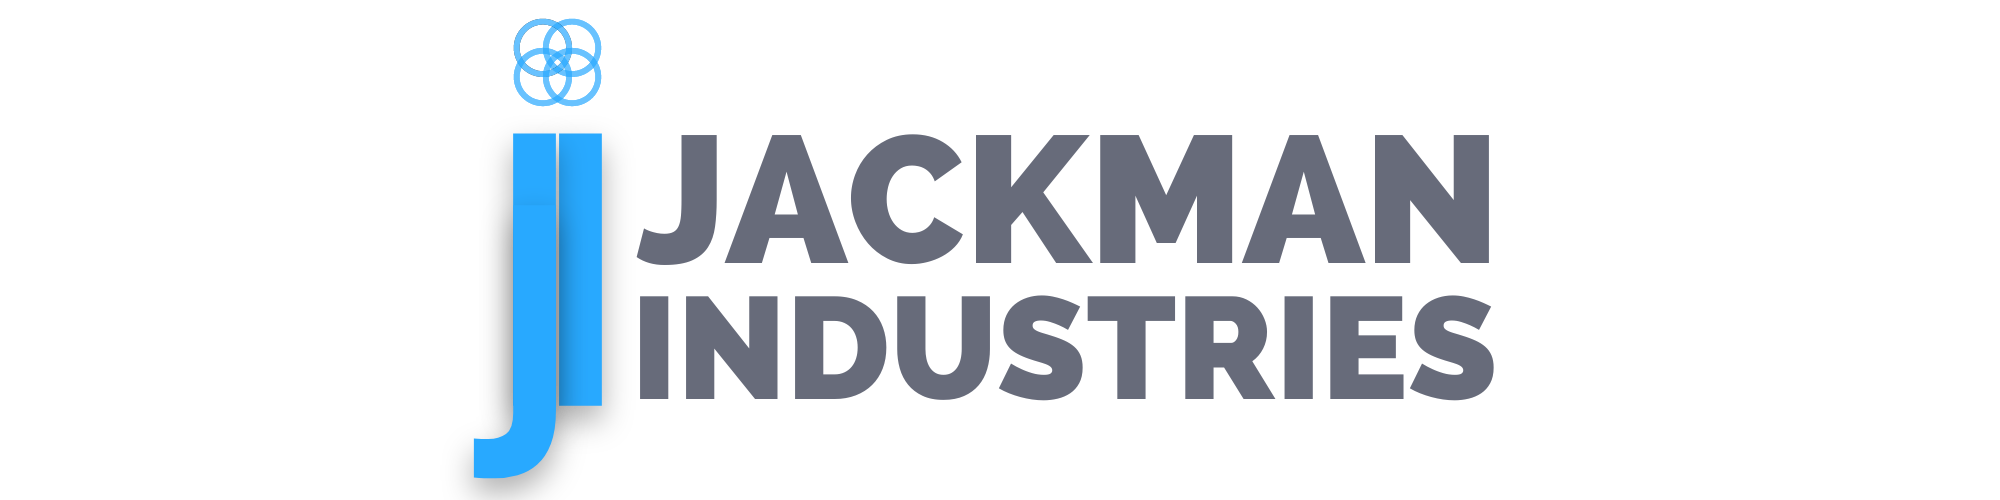 Jackman Industries